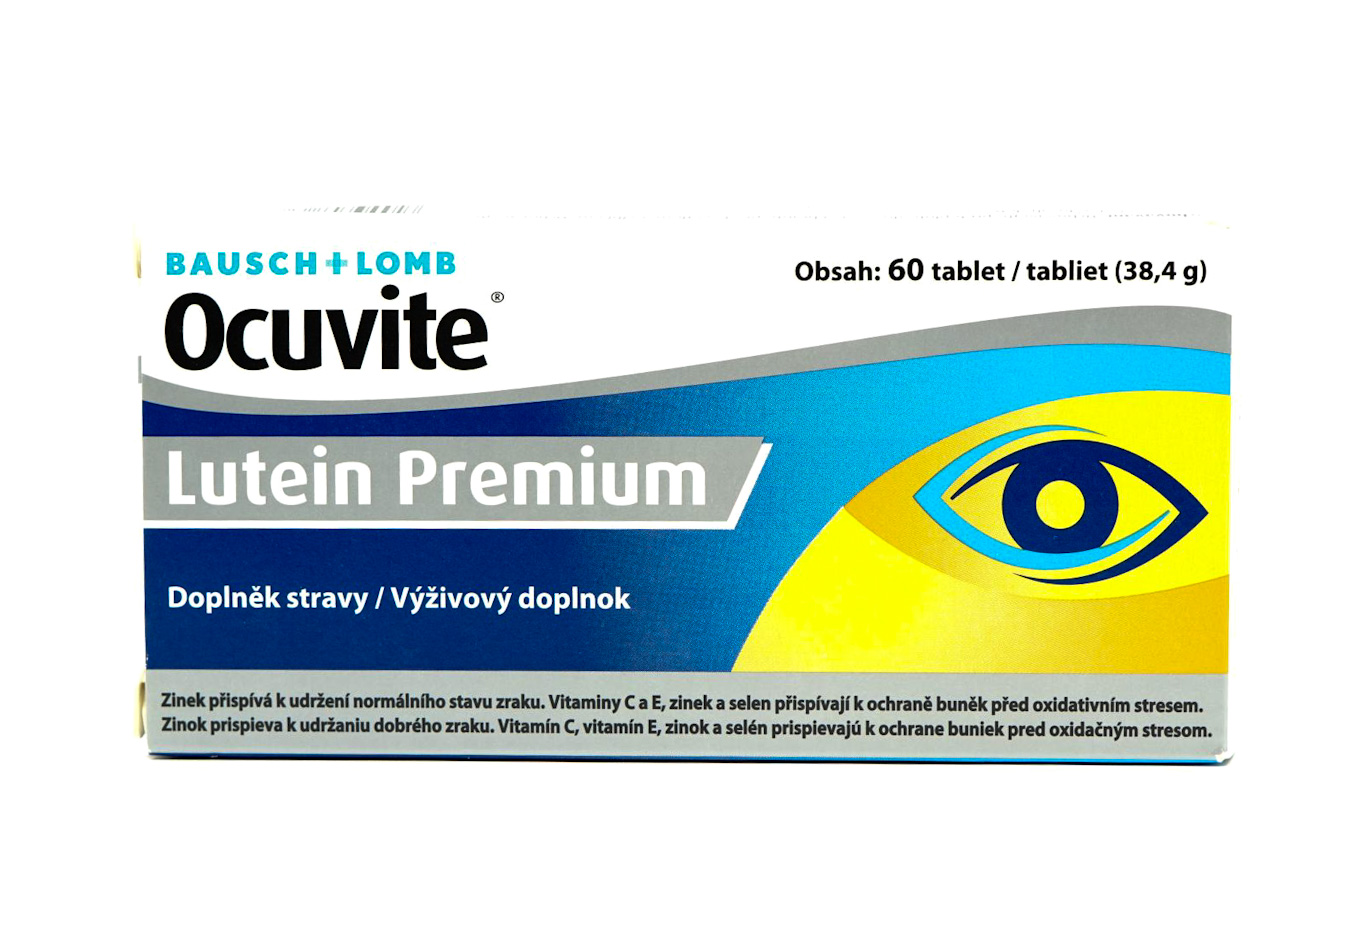 Ocuvite Lutein Premium 60 tbl (Bausch+Lomb)